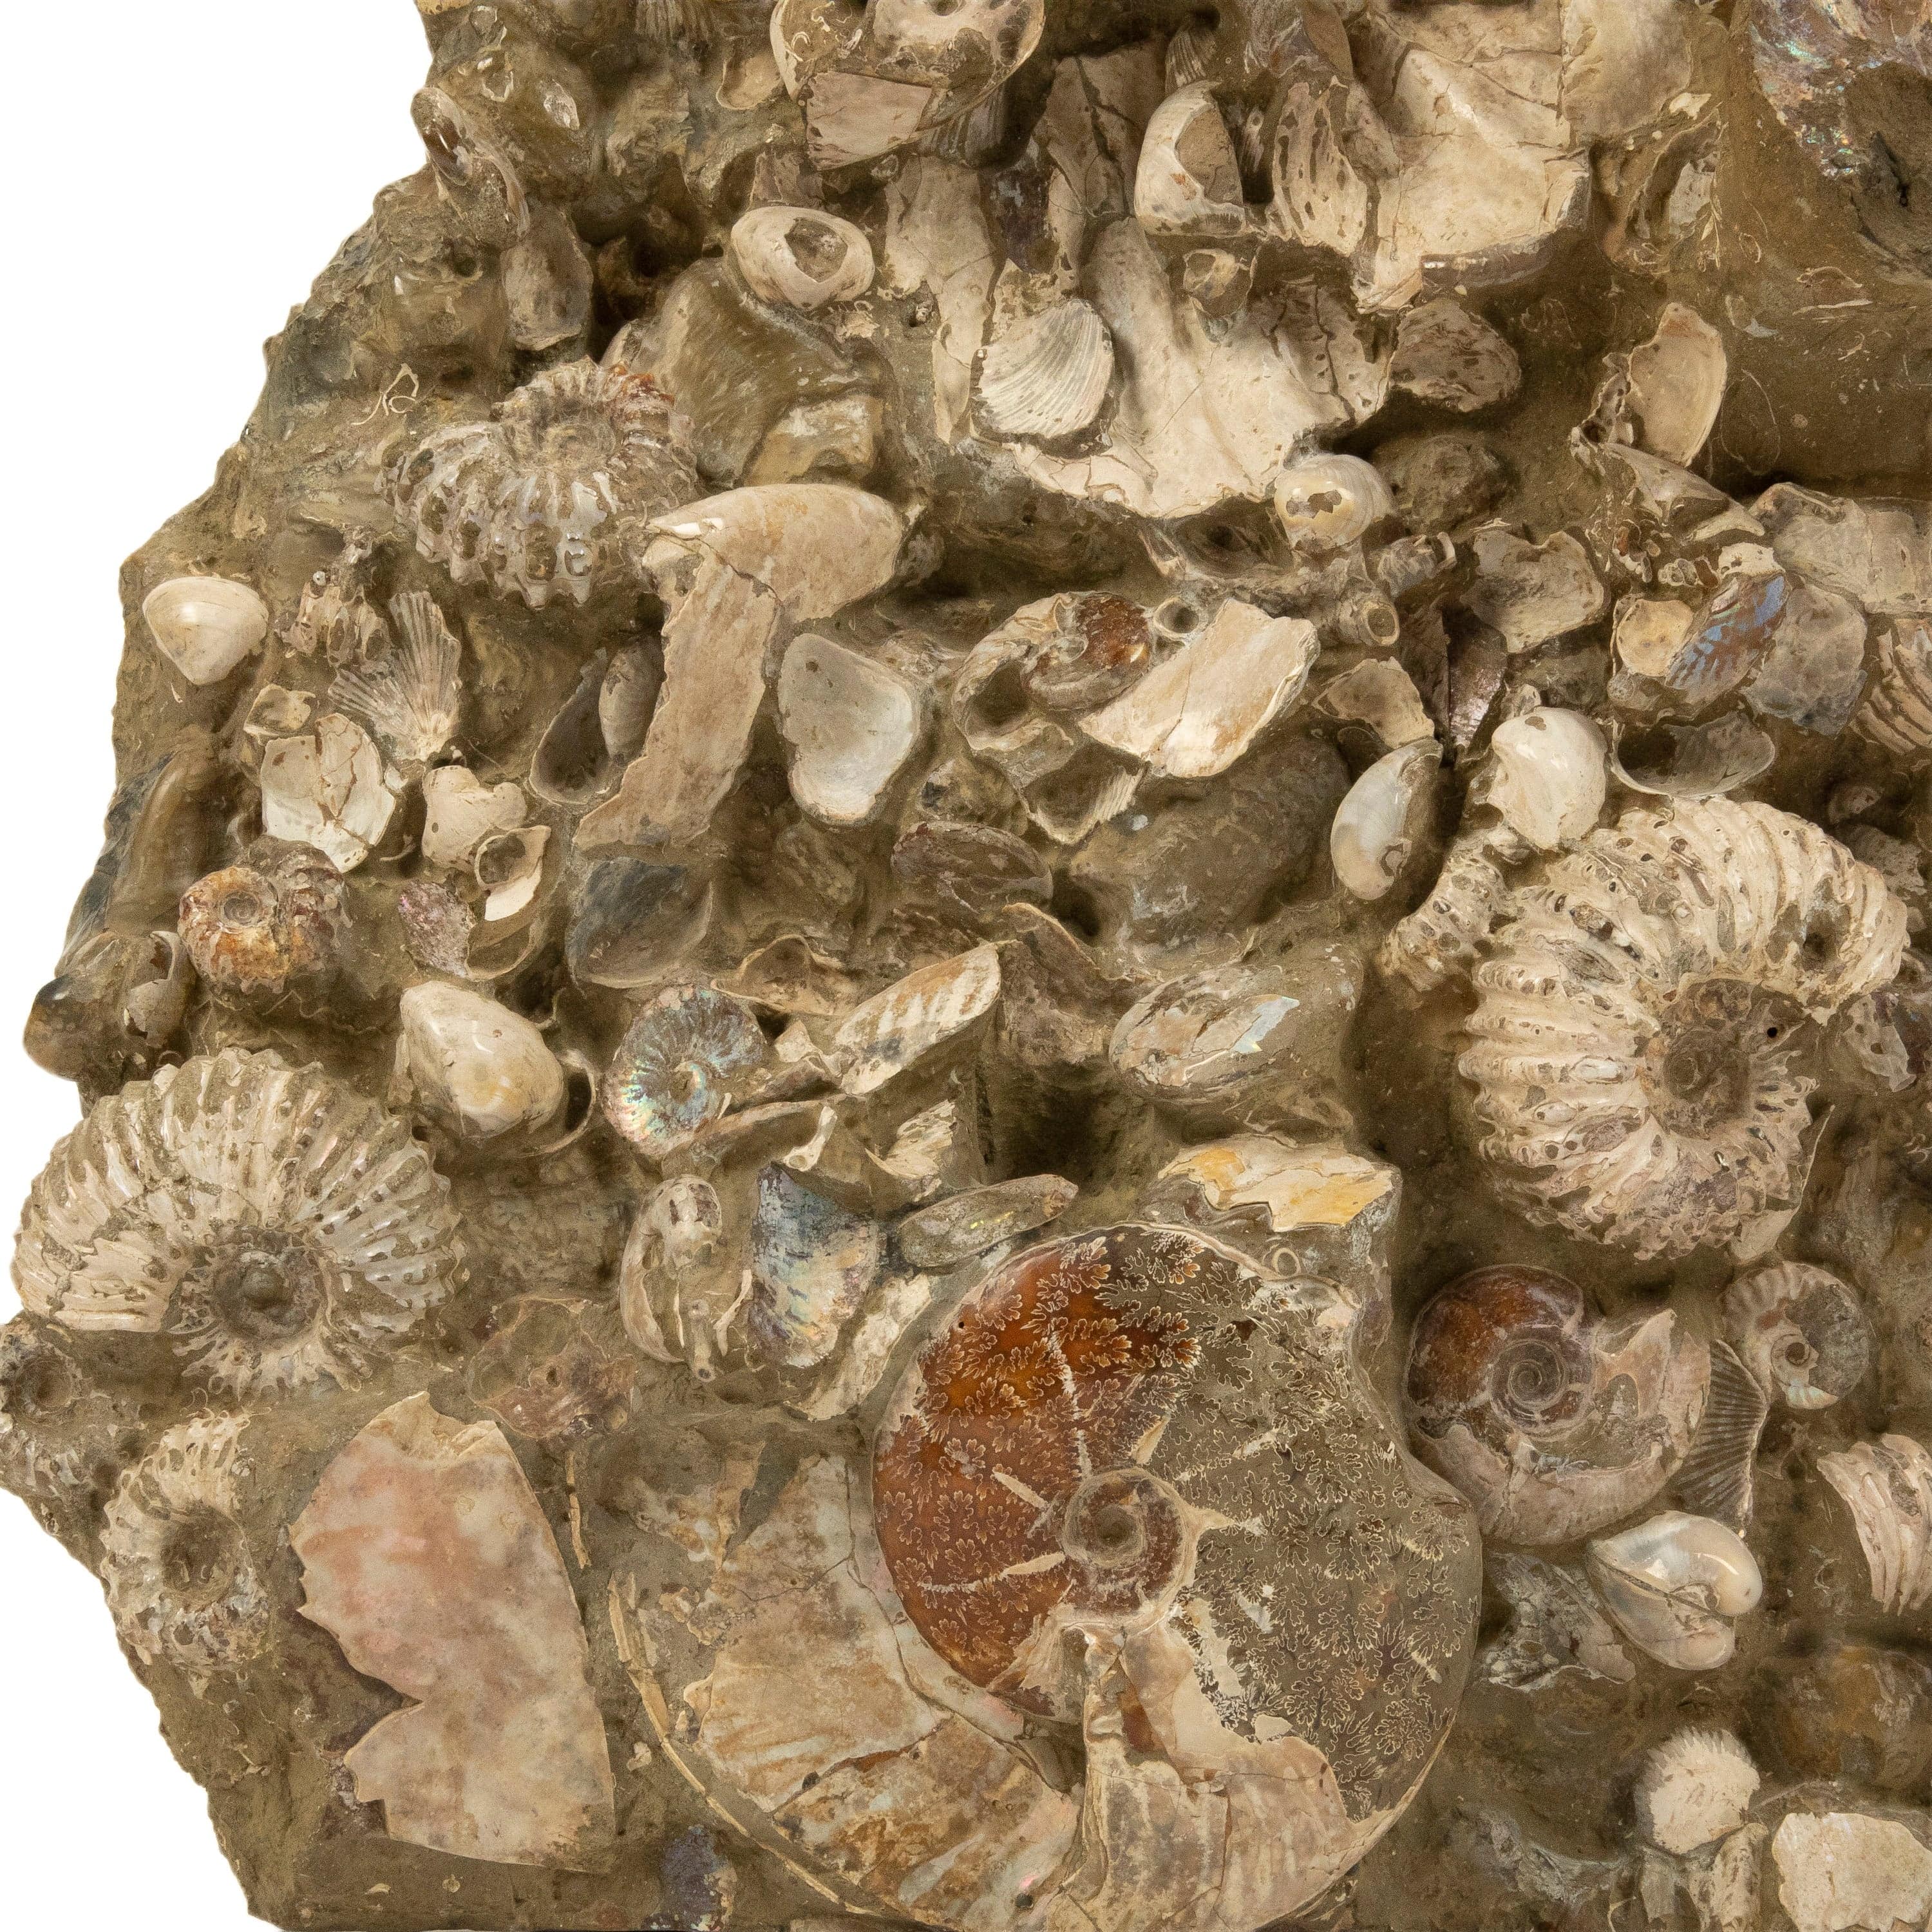 Kalifano Ammonites Natural Ammonite Colony in Matrix from Madagascar - 25" / 108 lbs AMM30000.001